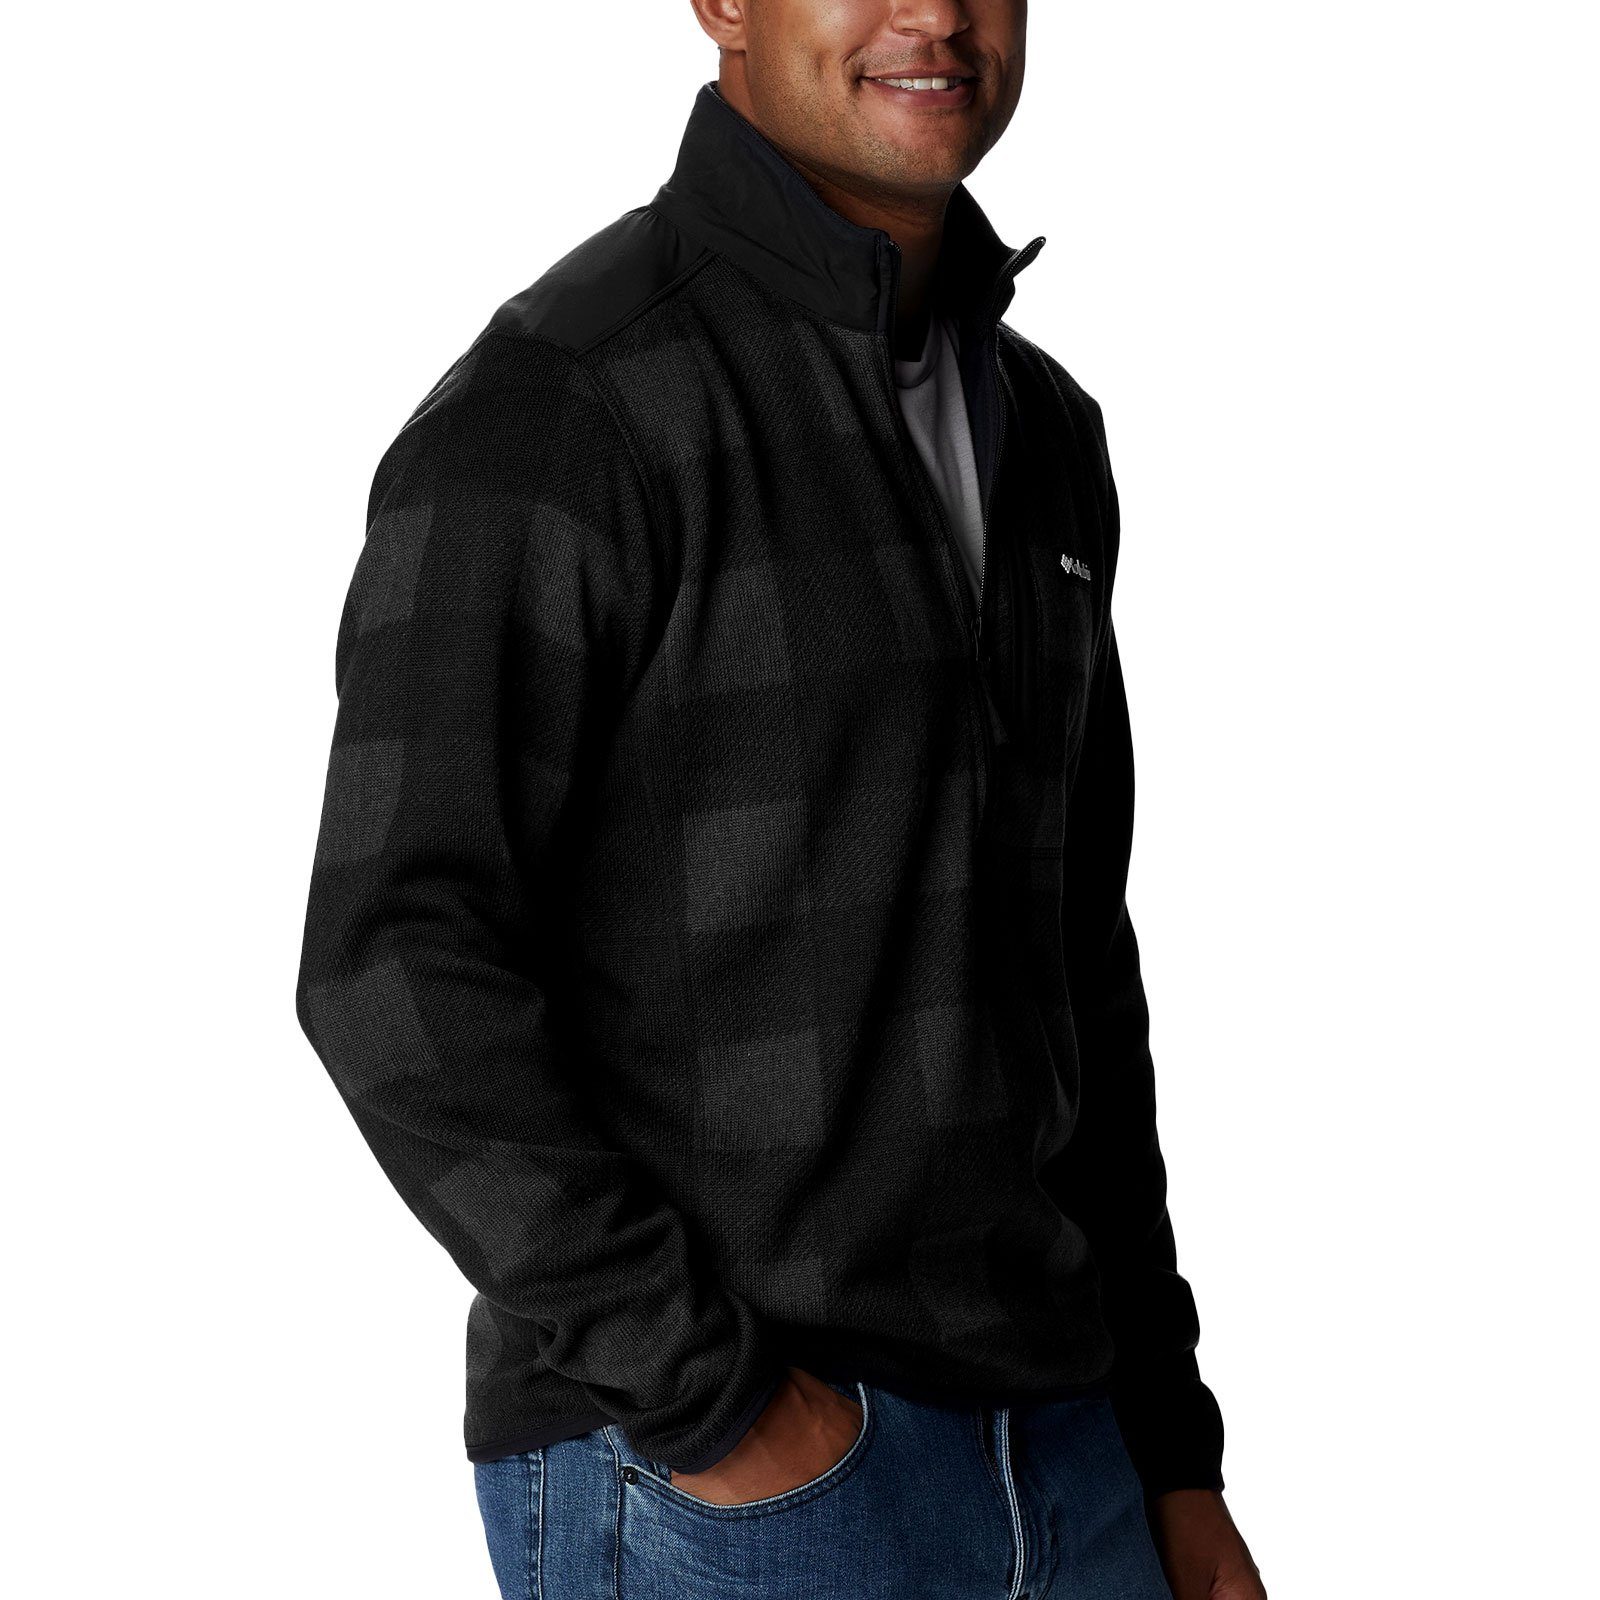 black print Brust Columbia Sweater Half-Zip mit check Printed 010 Logo buffalo Strickfleece-Pullover / auf der Weather™ II